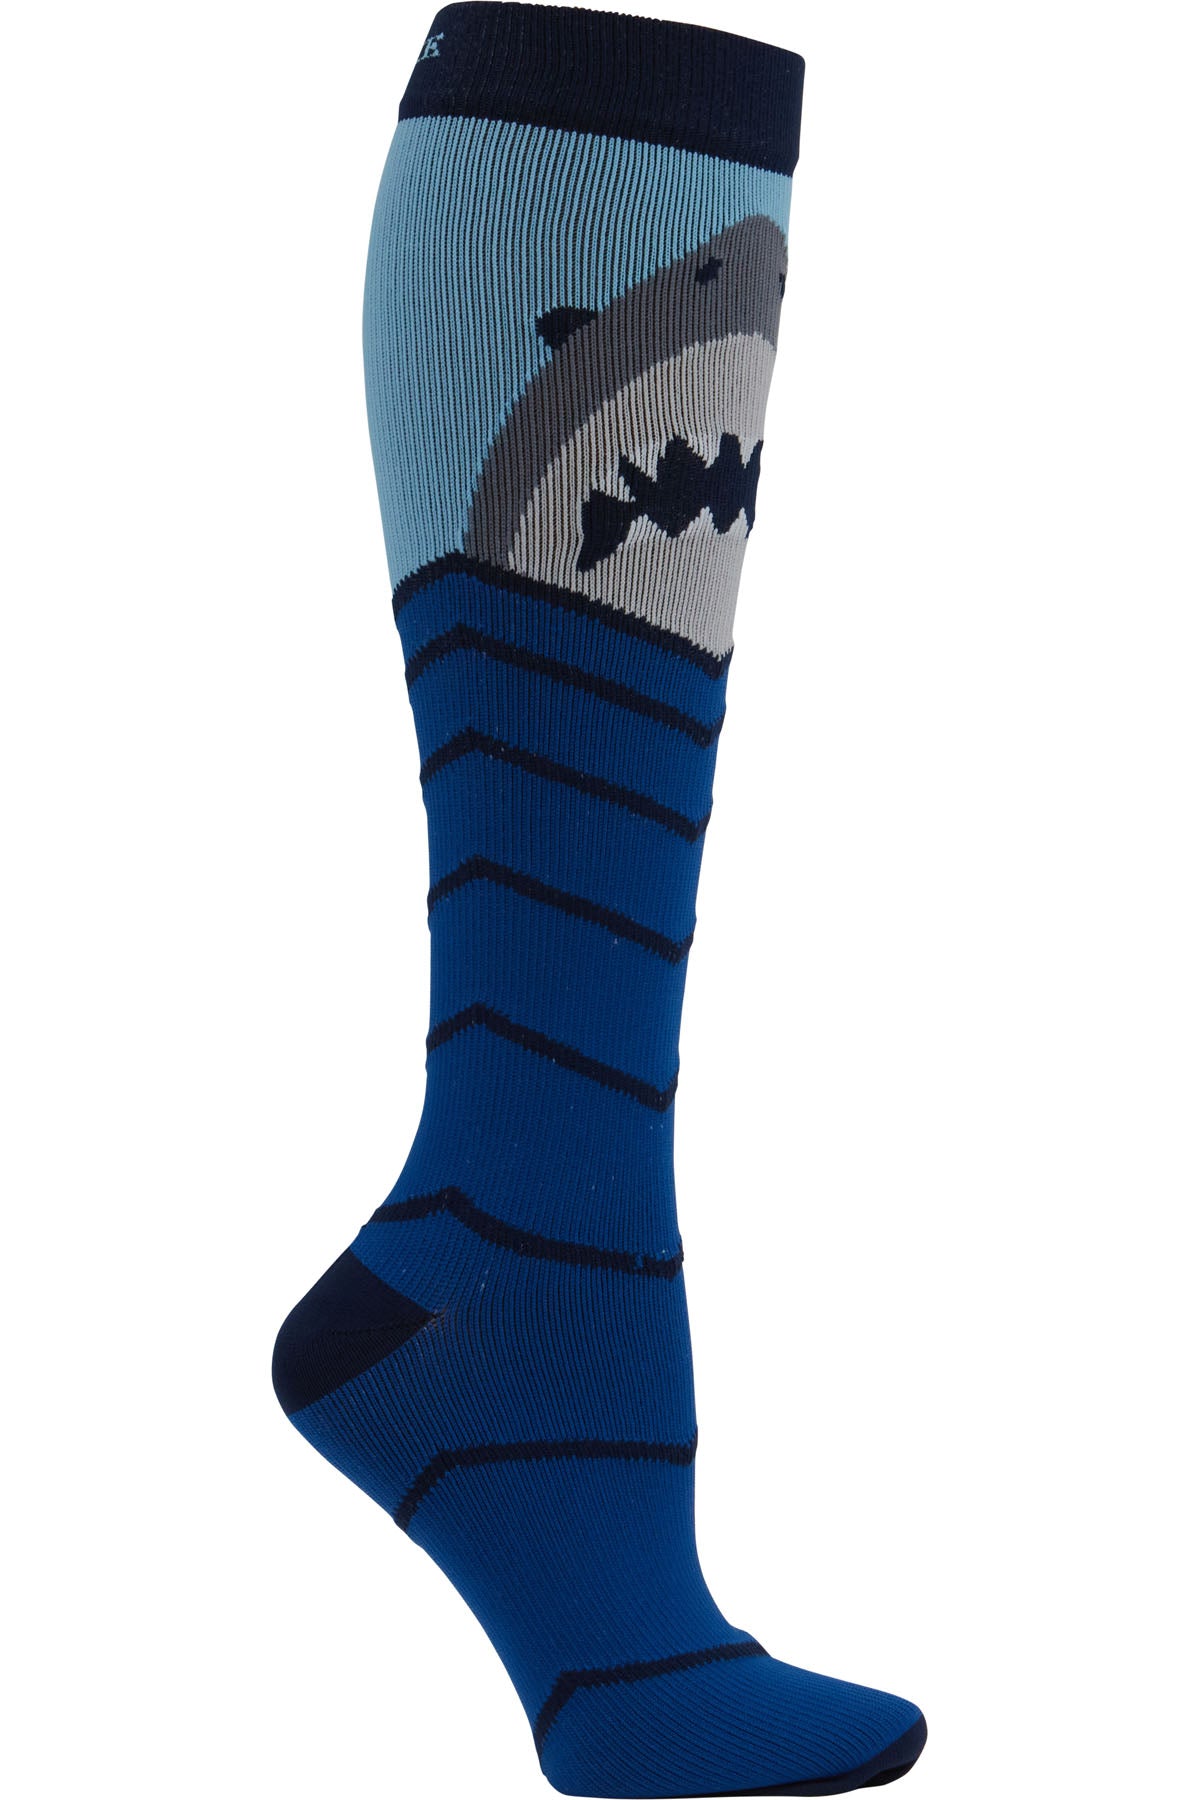 Men's 10-15mmHg Compression Socks Men's Compression Socks Cherokee Legwear Shark Attack  